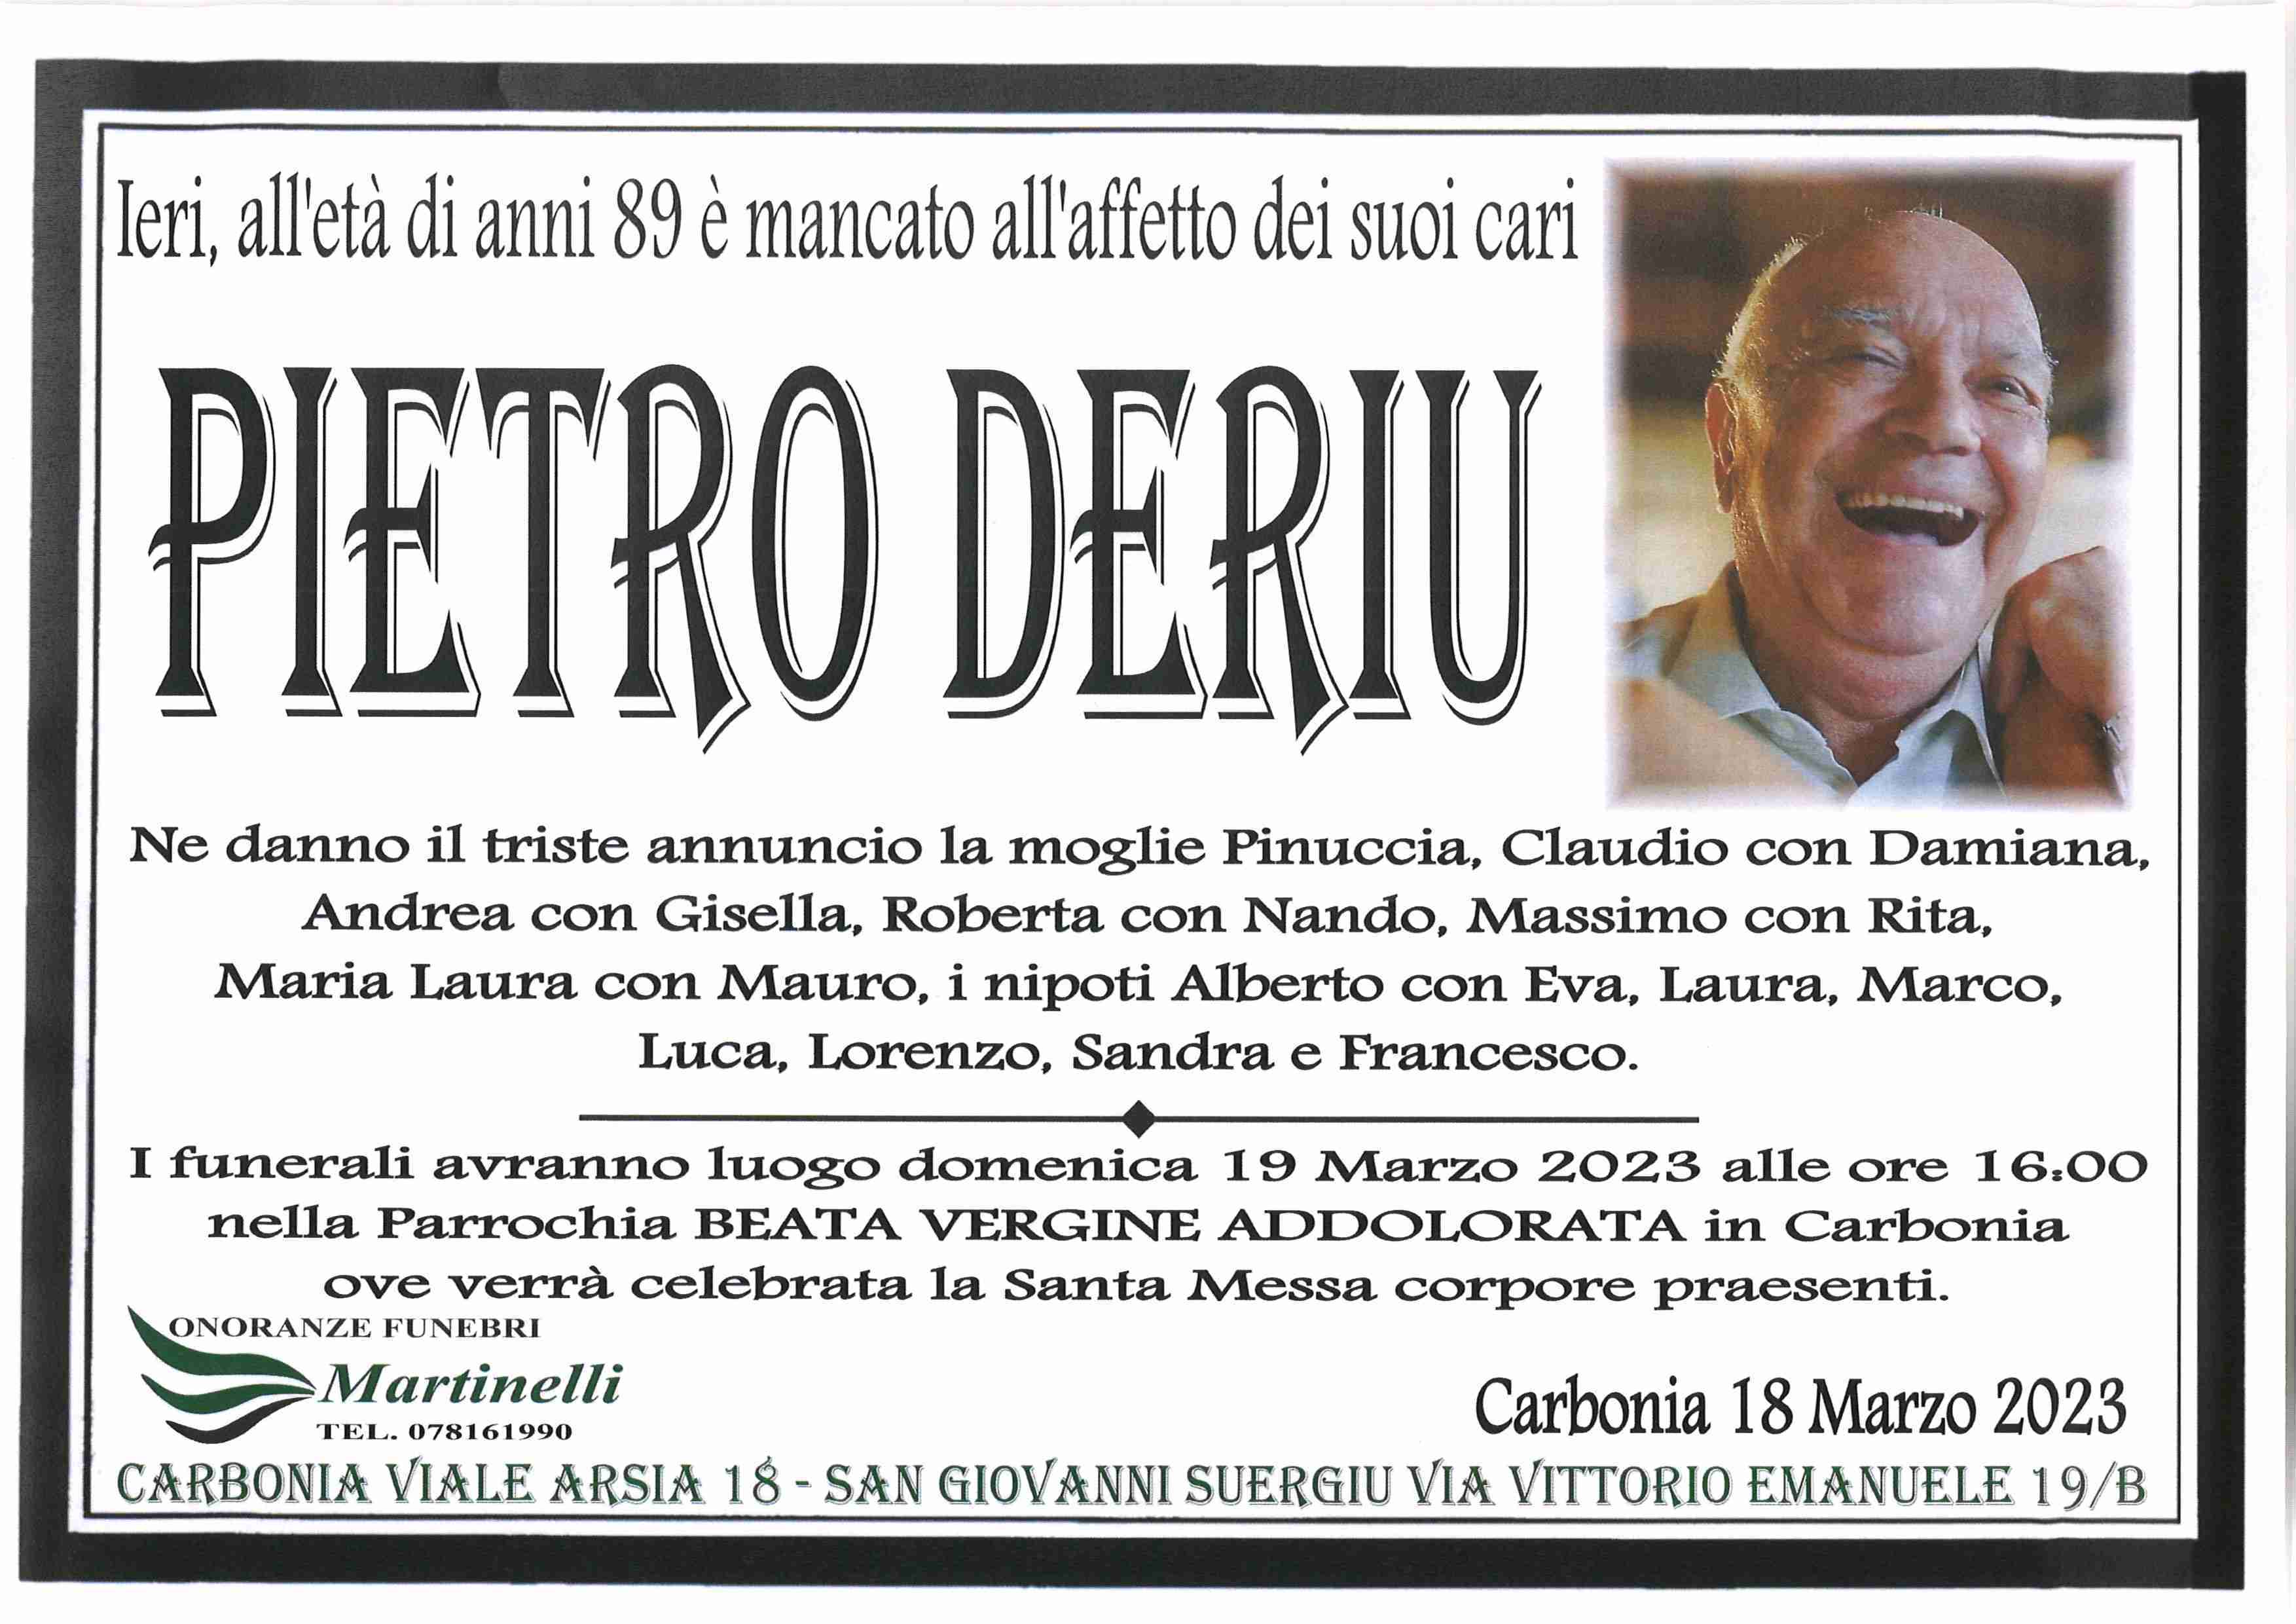 Pietro Deriu